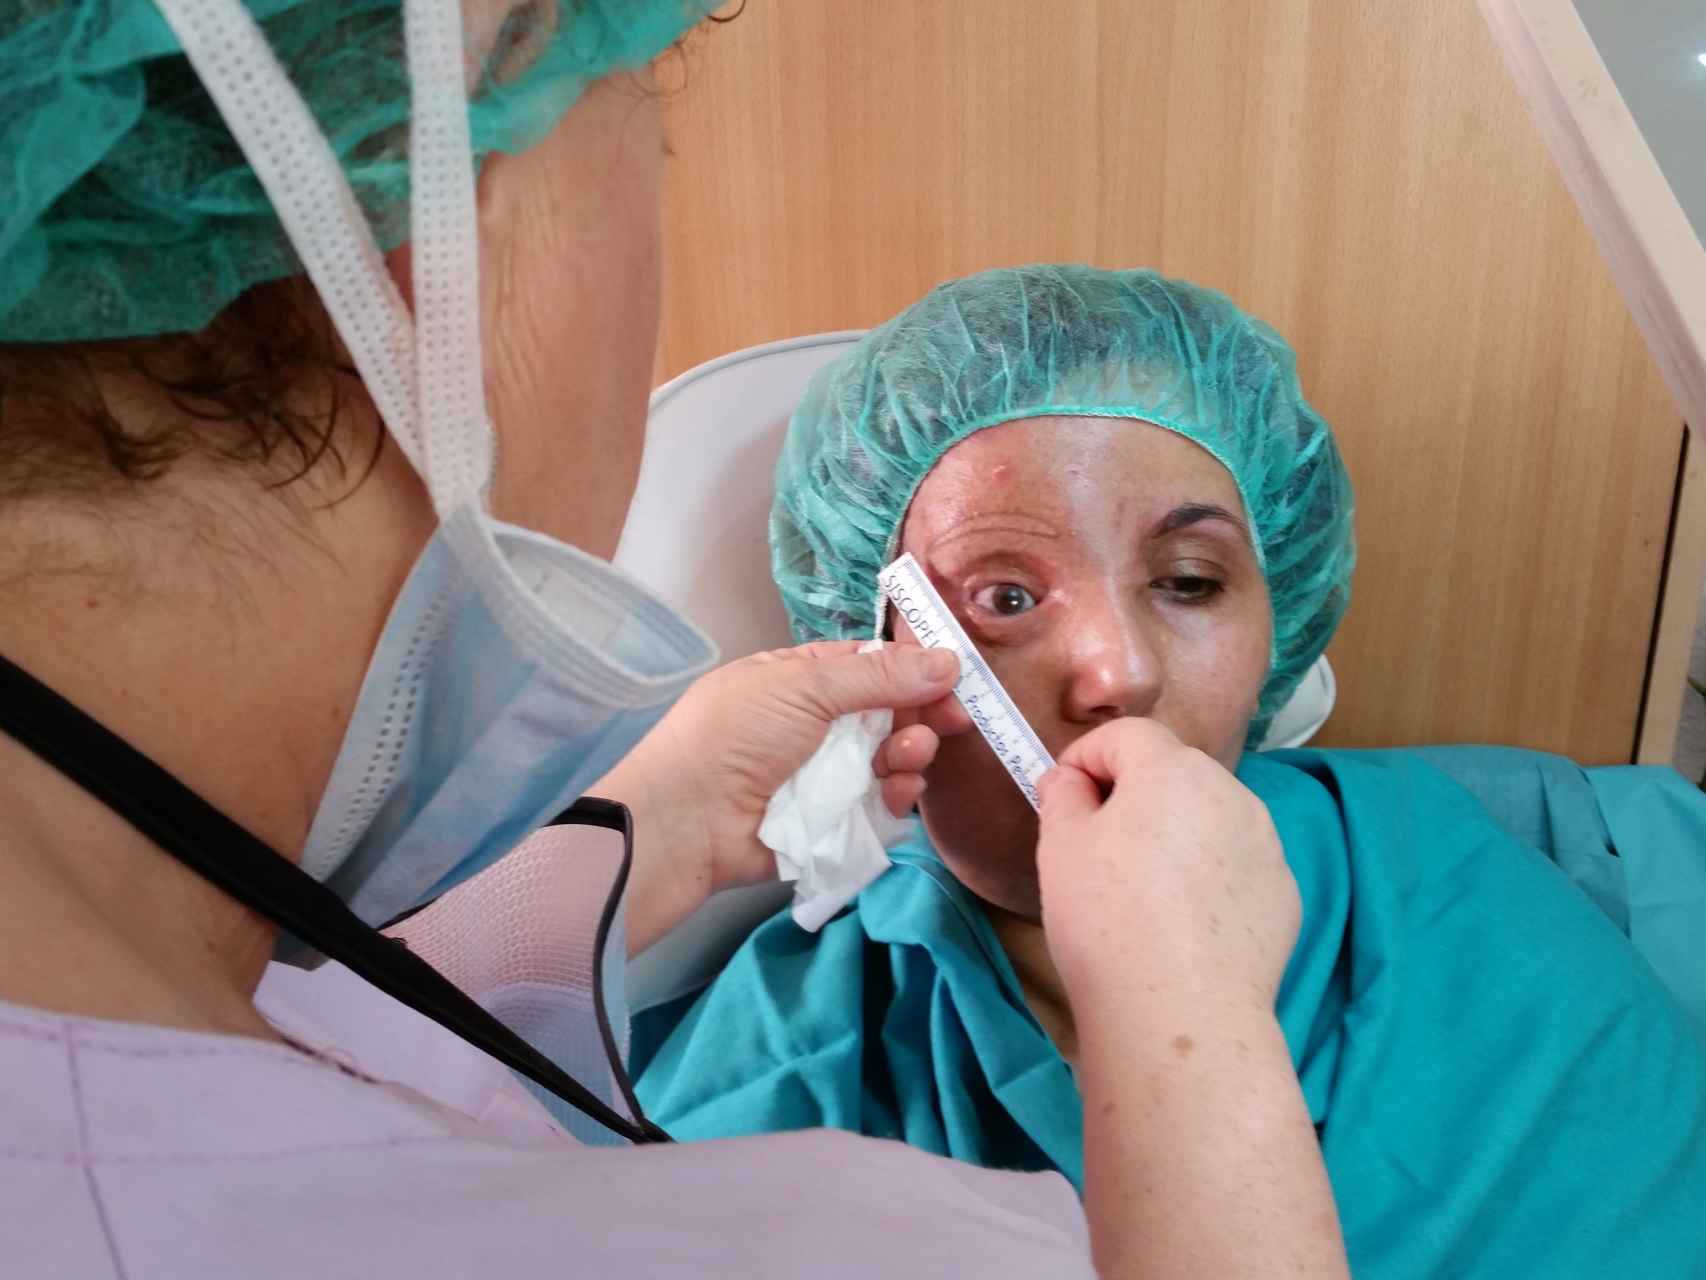 A Samira, tras extirparle el tumor, se le fijó un ojo de cristal y se le tatuó la ceja derecha.